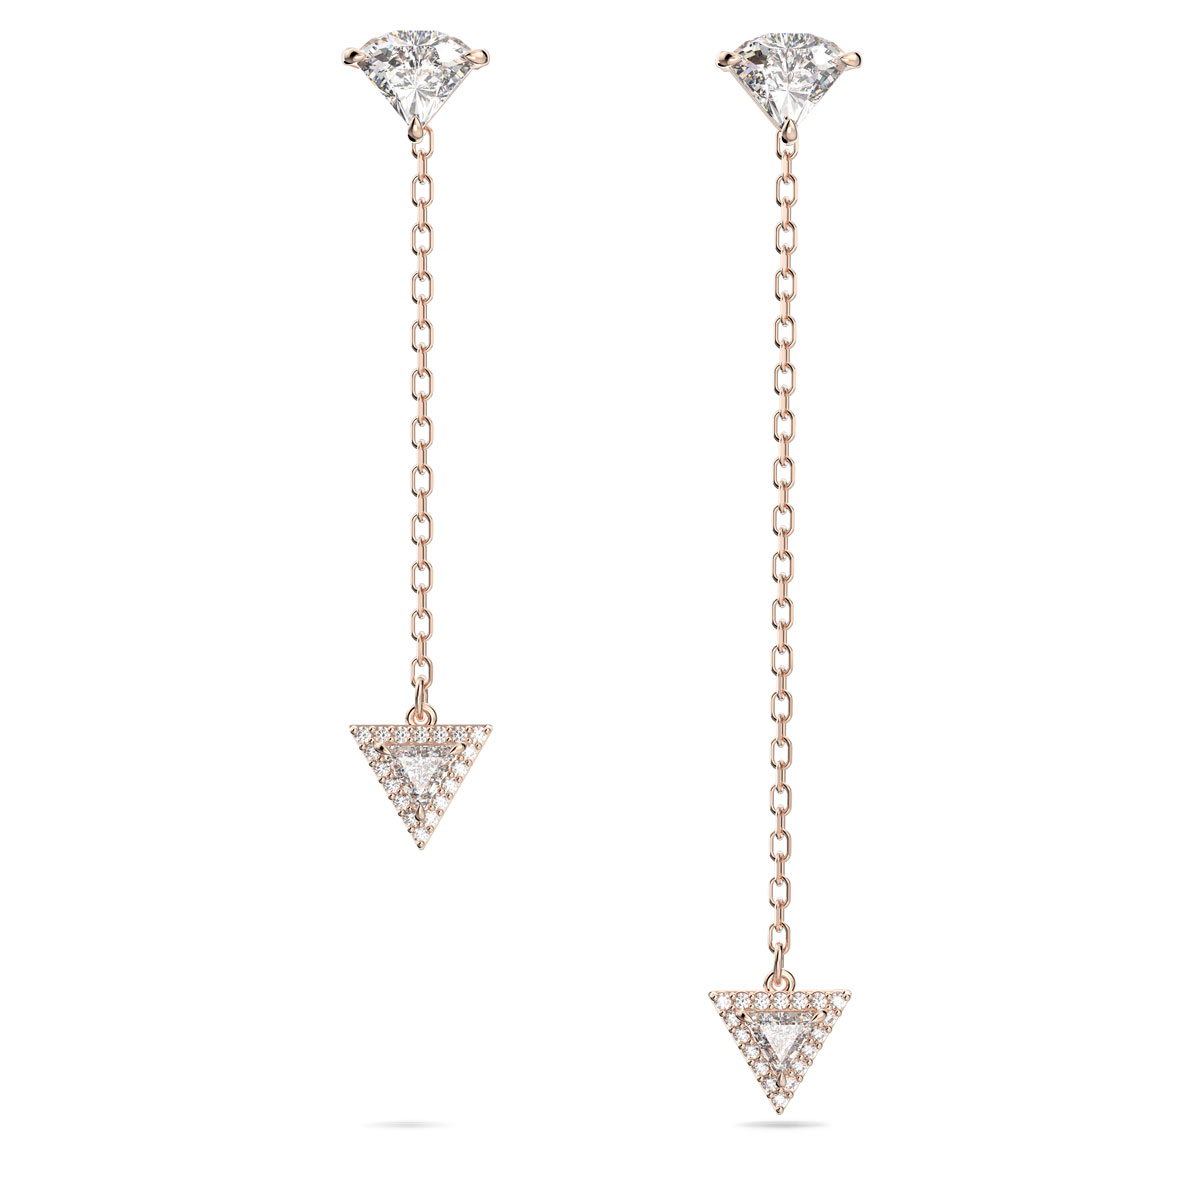 Swarovski Ortyx Drop Earrings, Triangle Cut, Asymmetric Design, White, Rose Gold Tone Plated